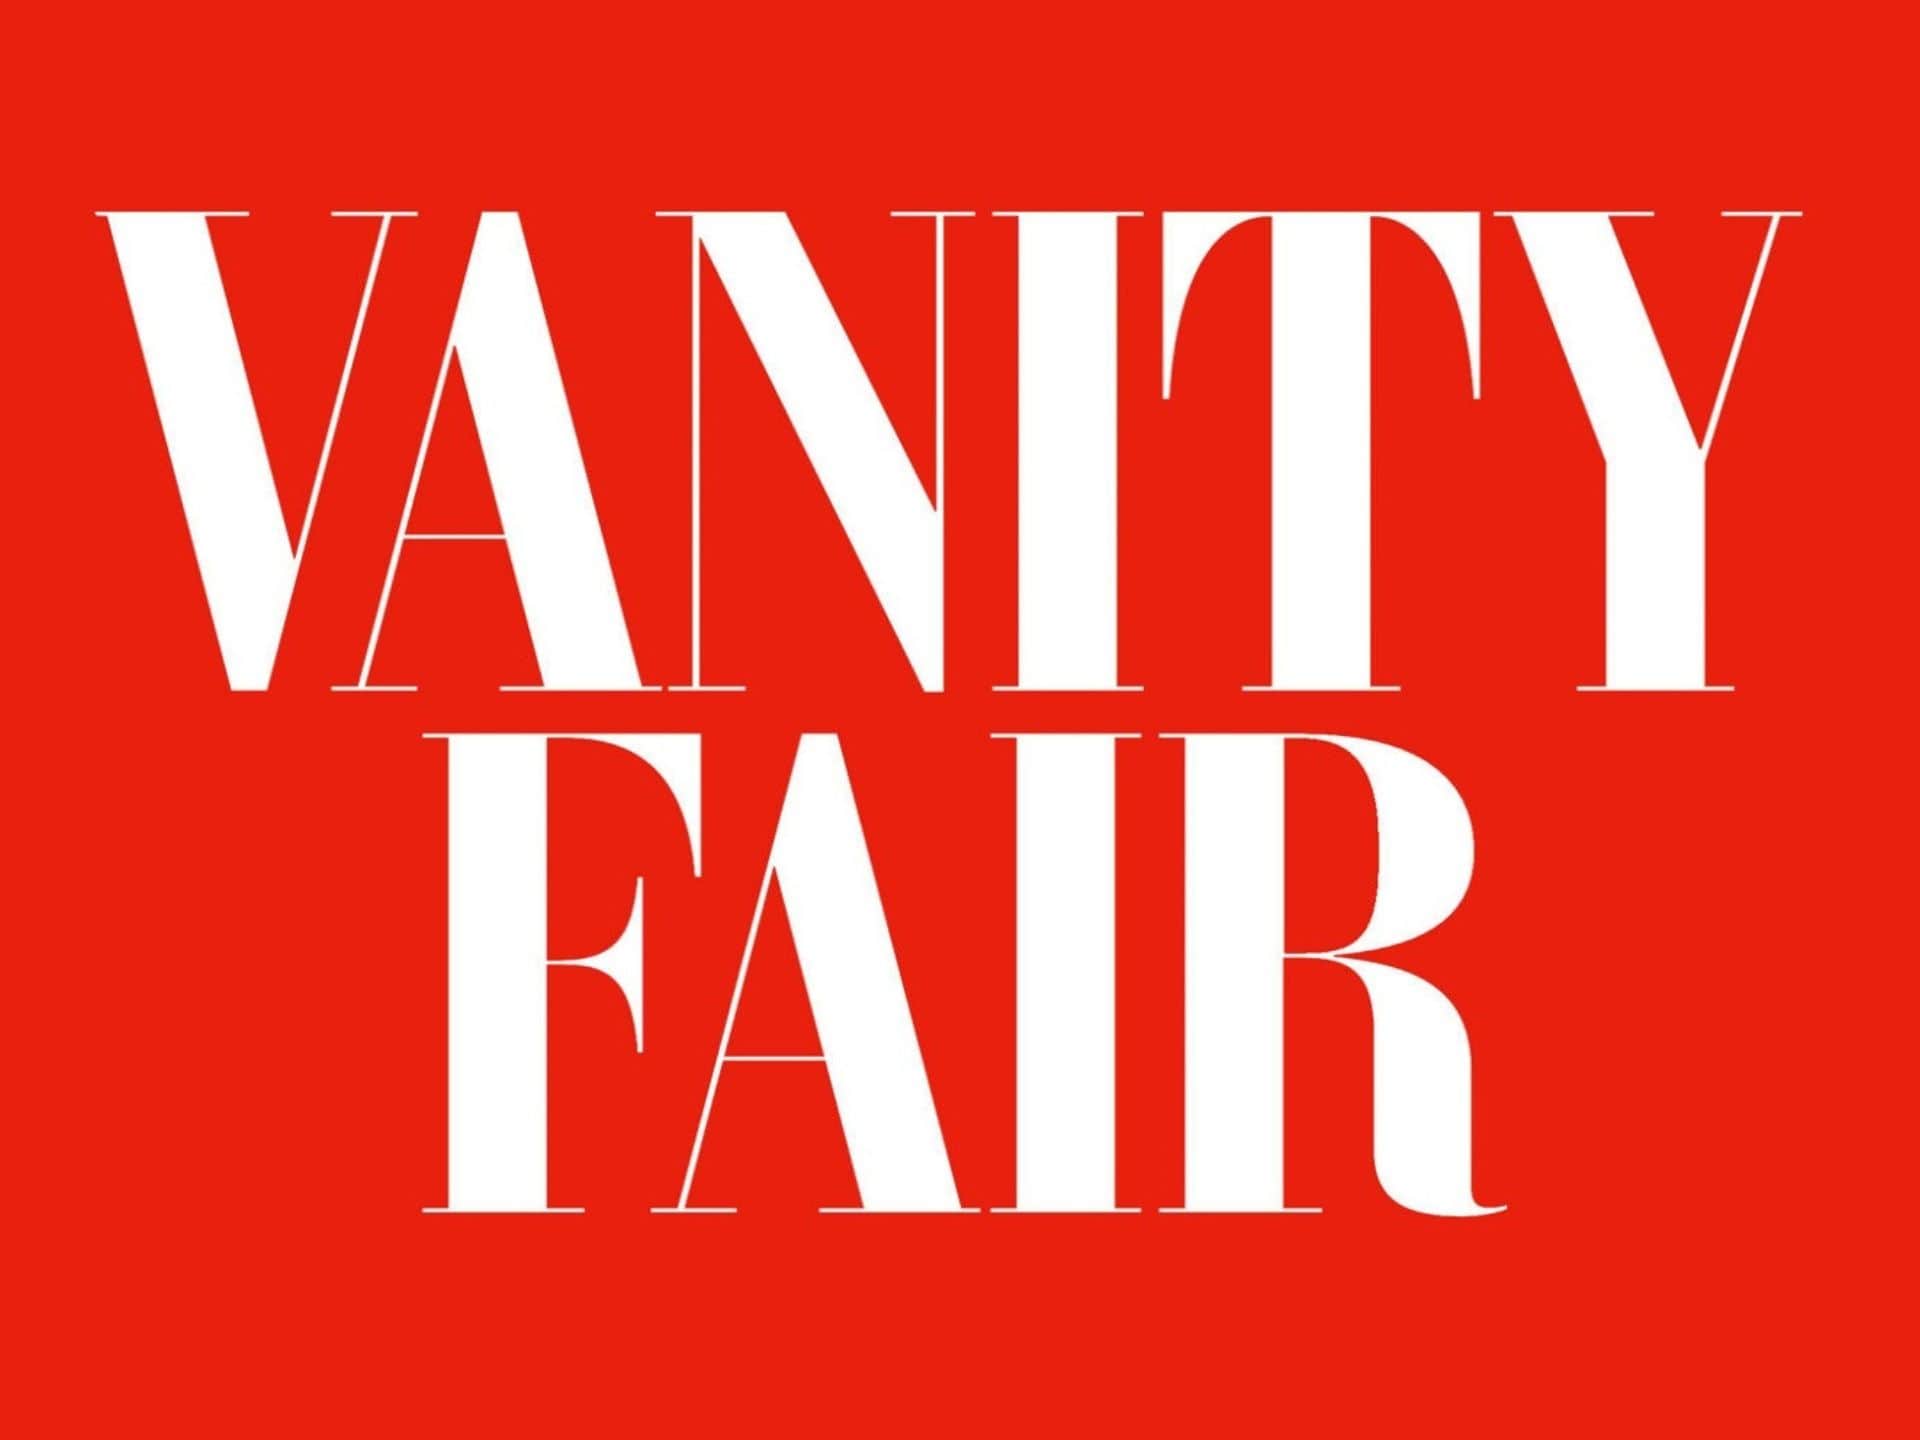 Vanity fair logo